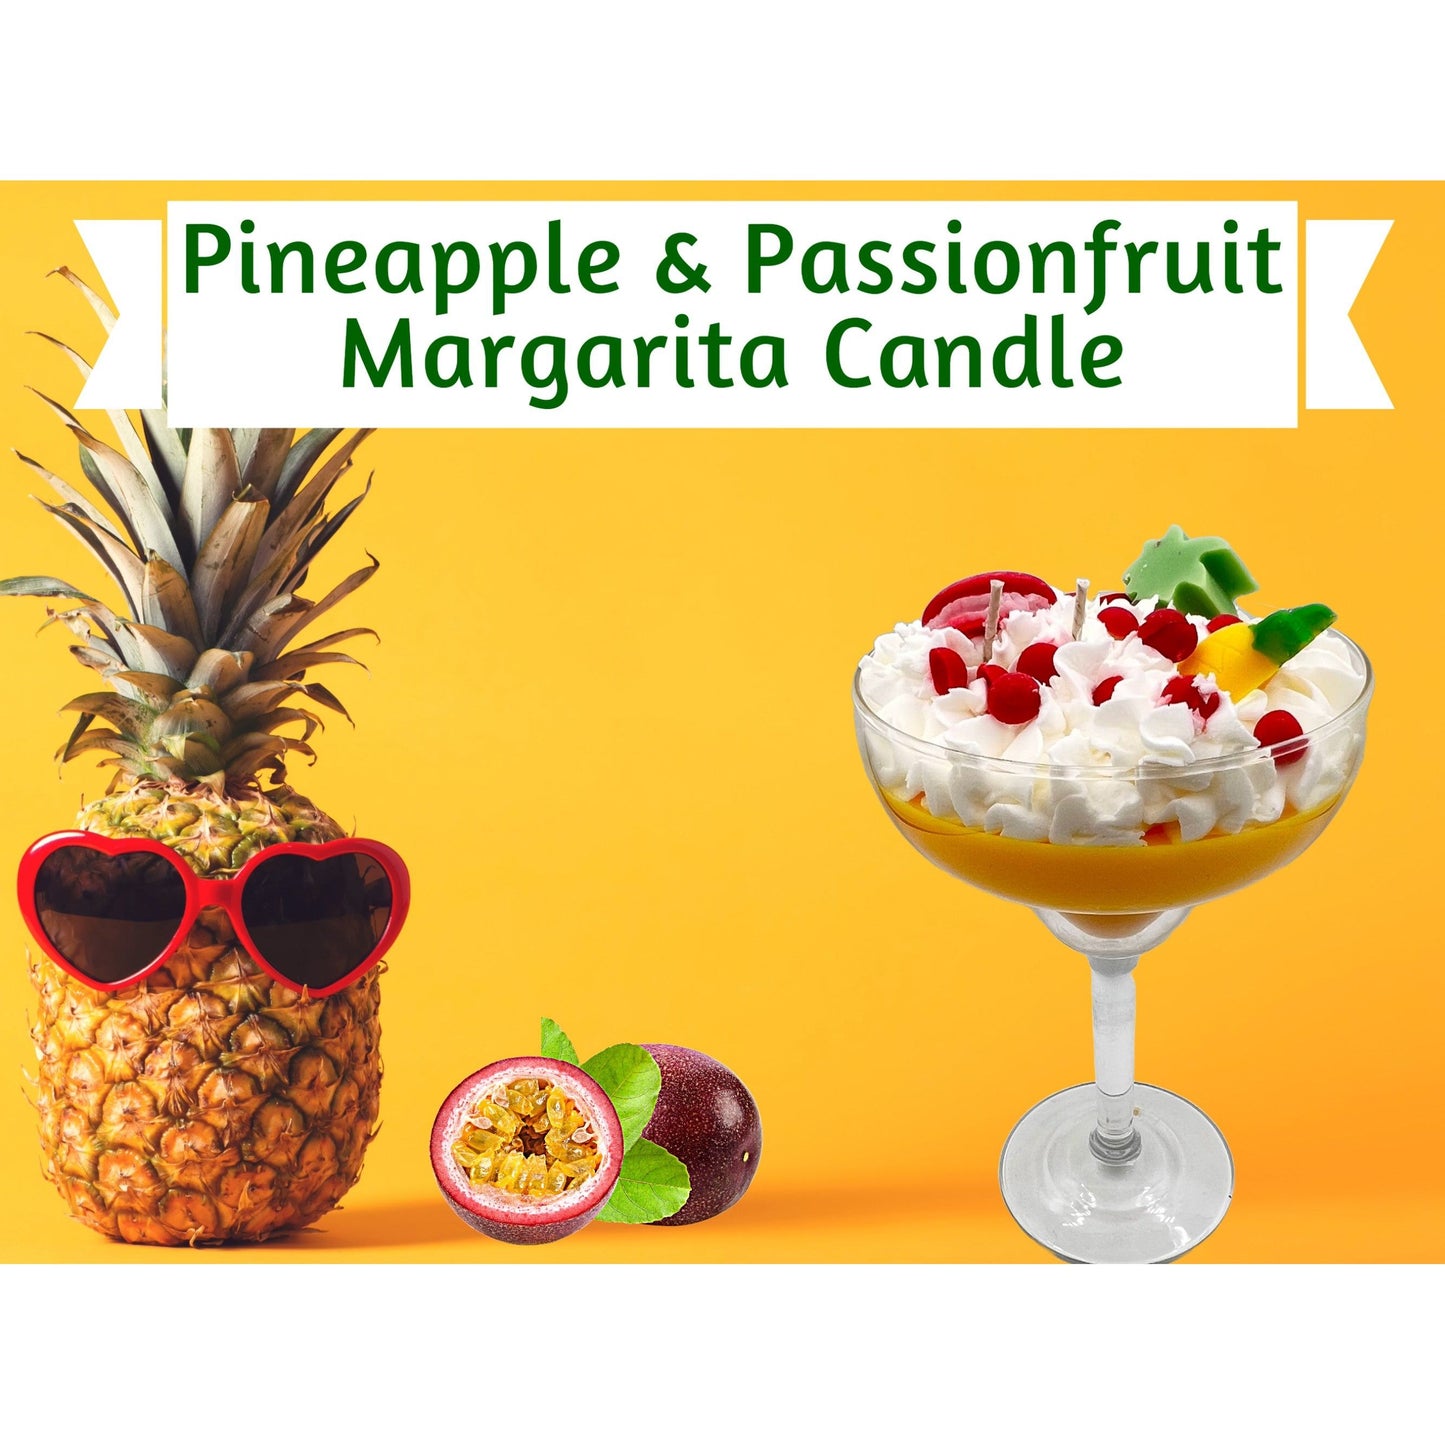 Pineapple & Passionfruit Margarita Candle